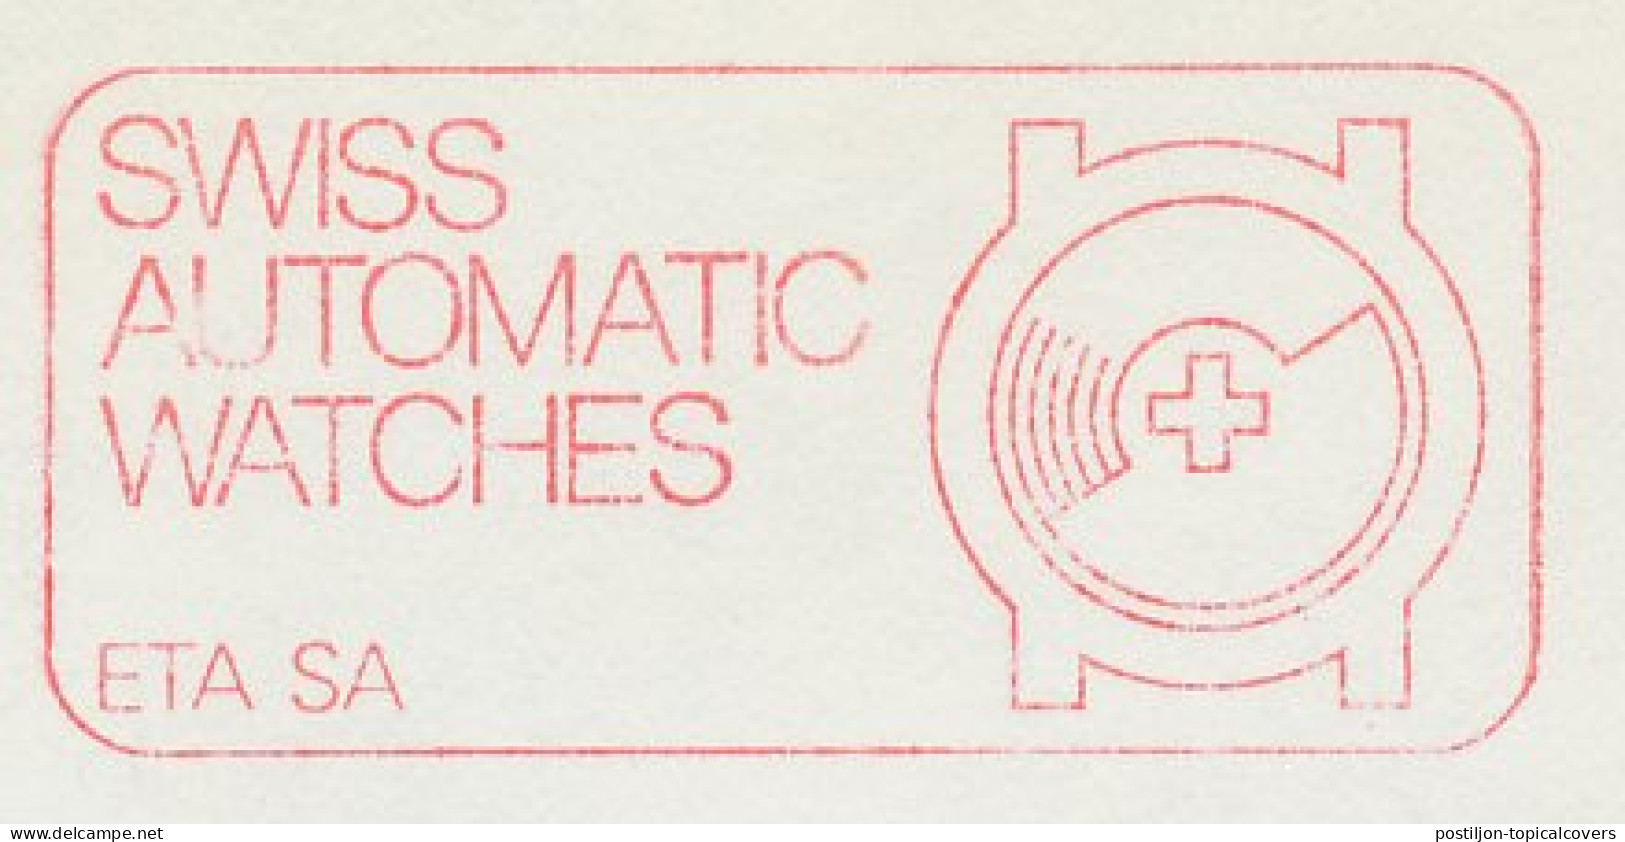 Meter Cut Switzerland 1975 Automatic Watch - Clocks